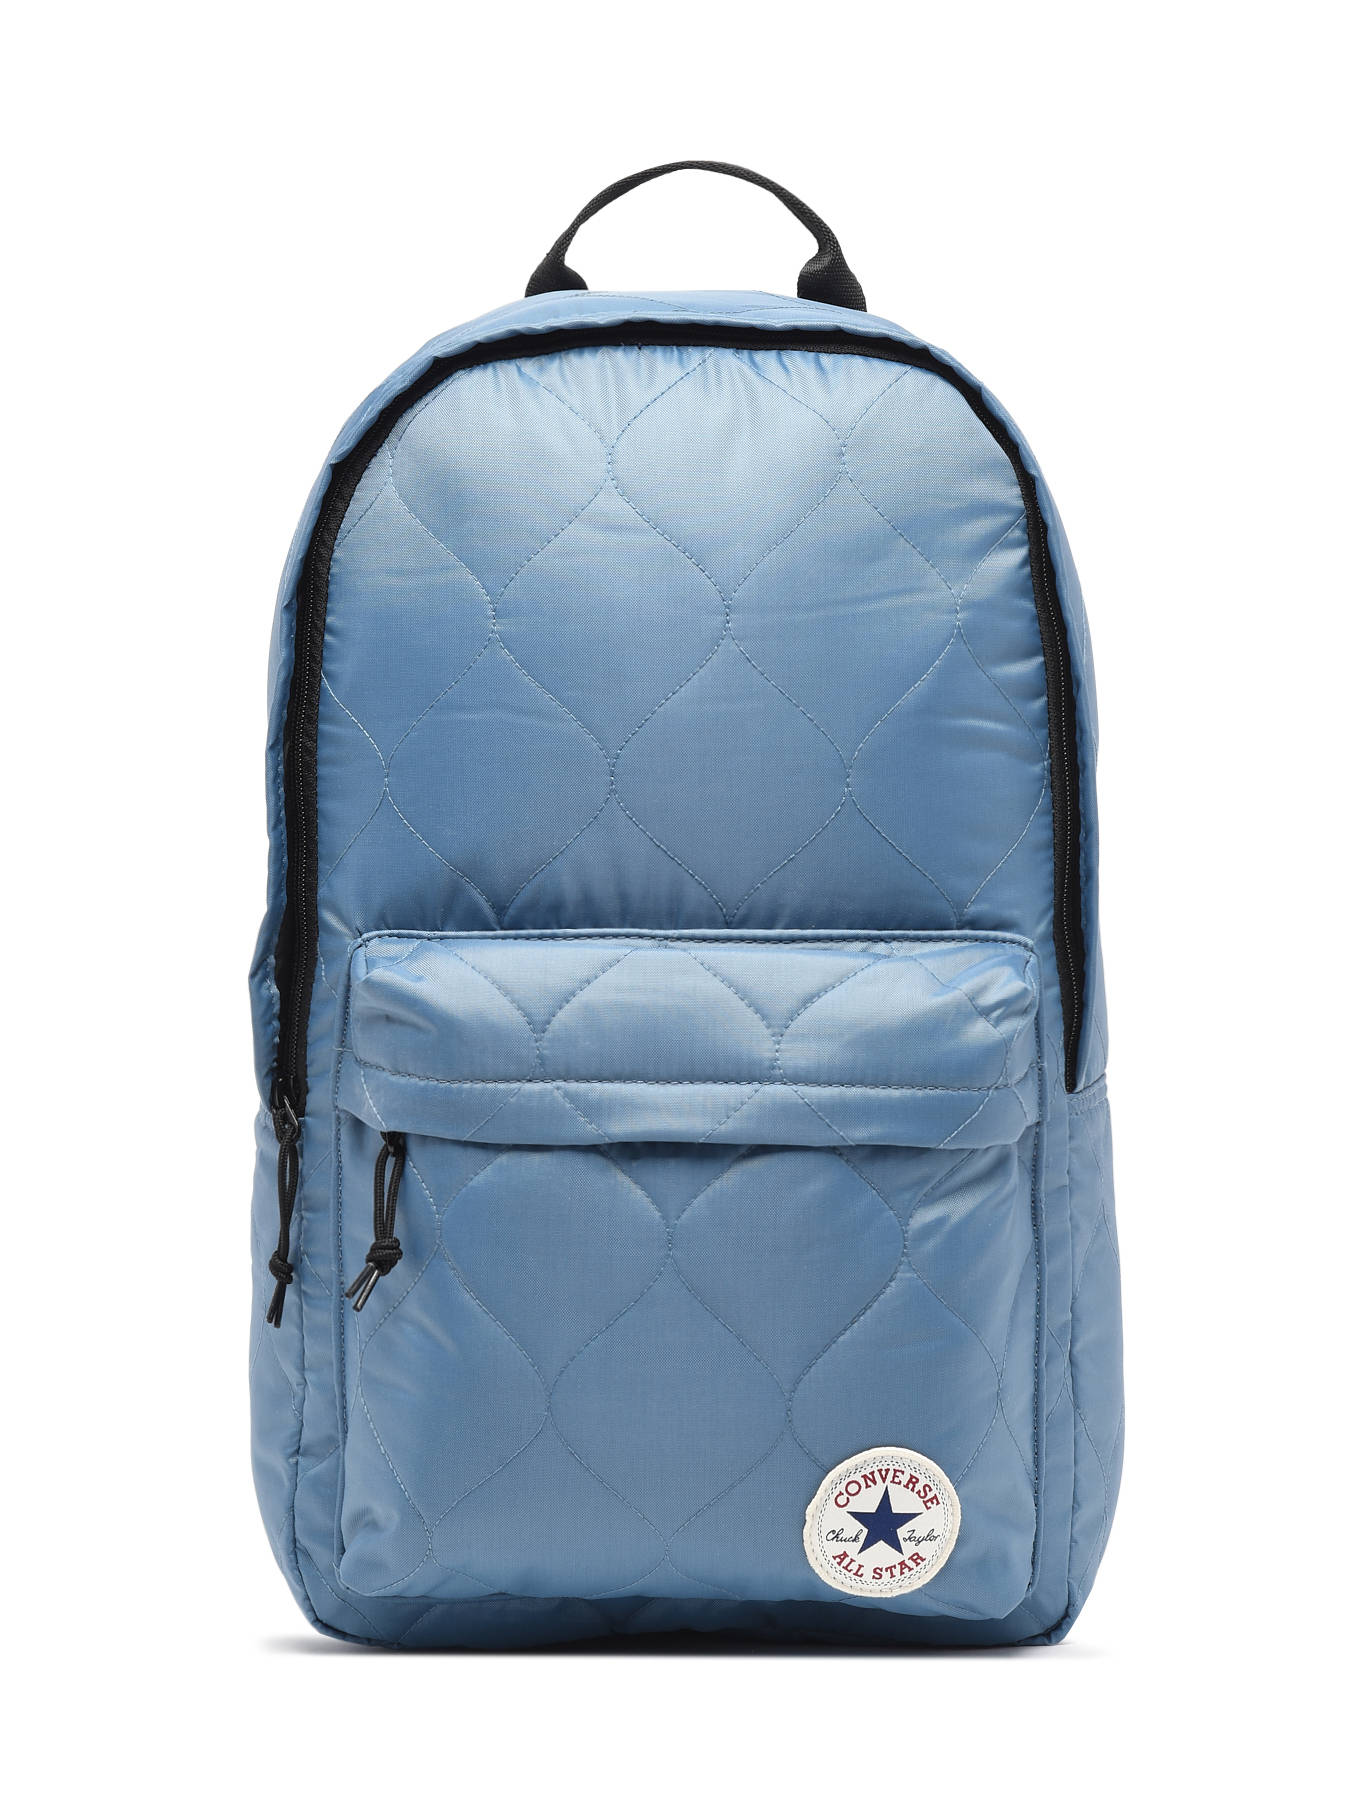 Converse All Star Backpack School Bag Navy Blue | eBay